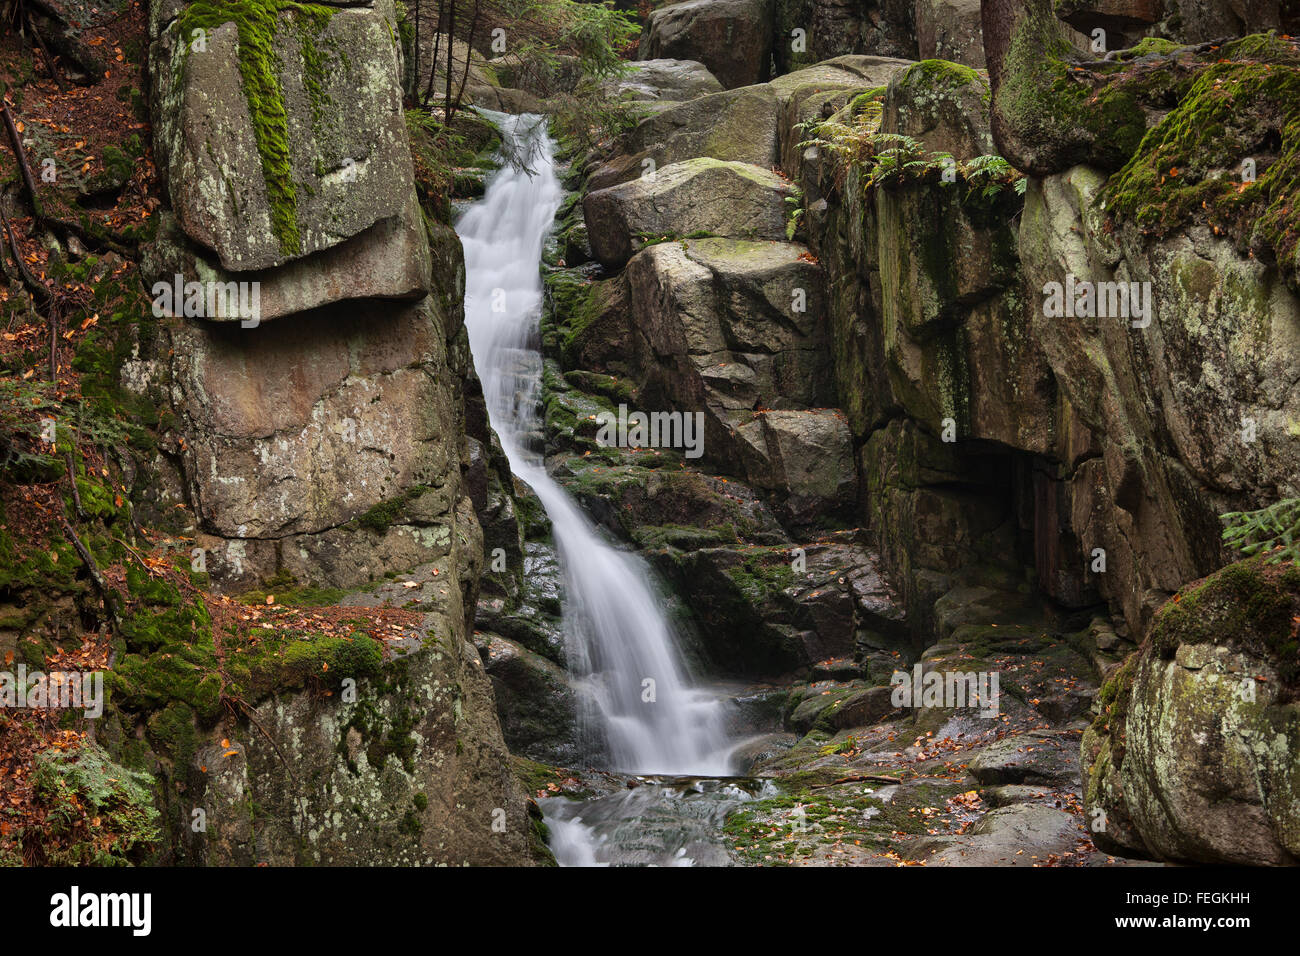 Podgorna Wasserfall Przesieka, Riesengebirge, Polen Stockfoto